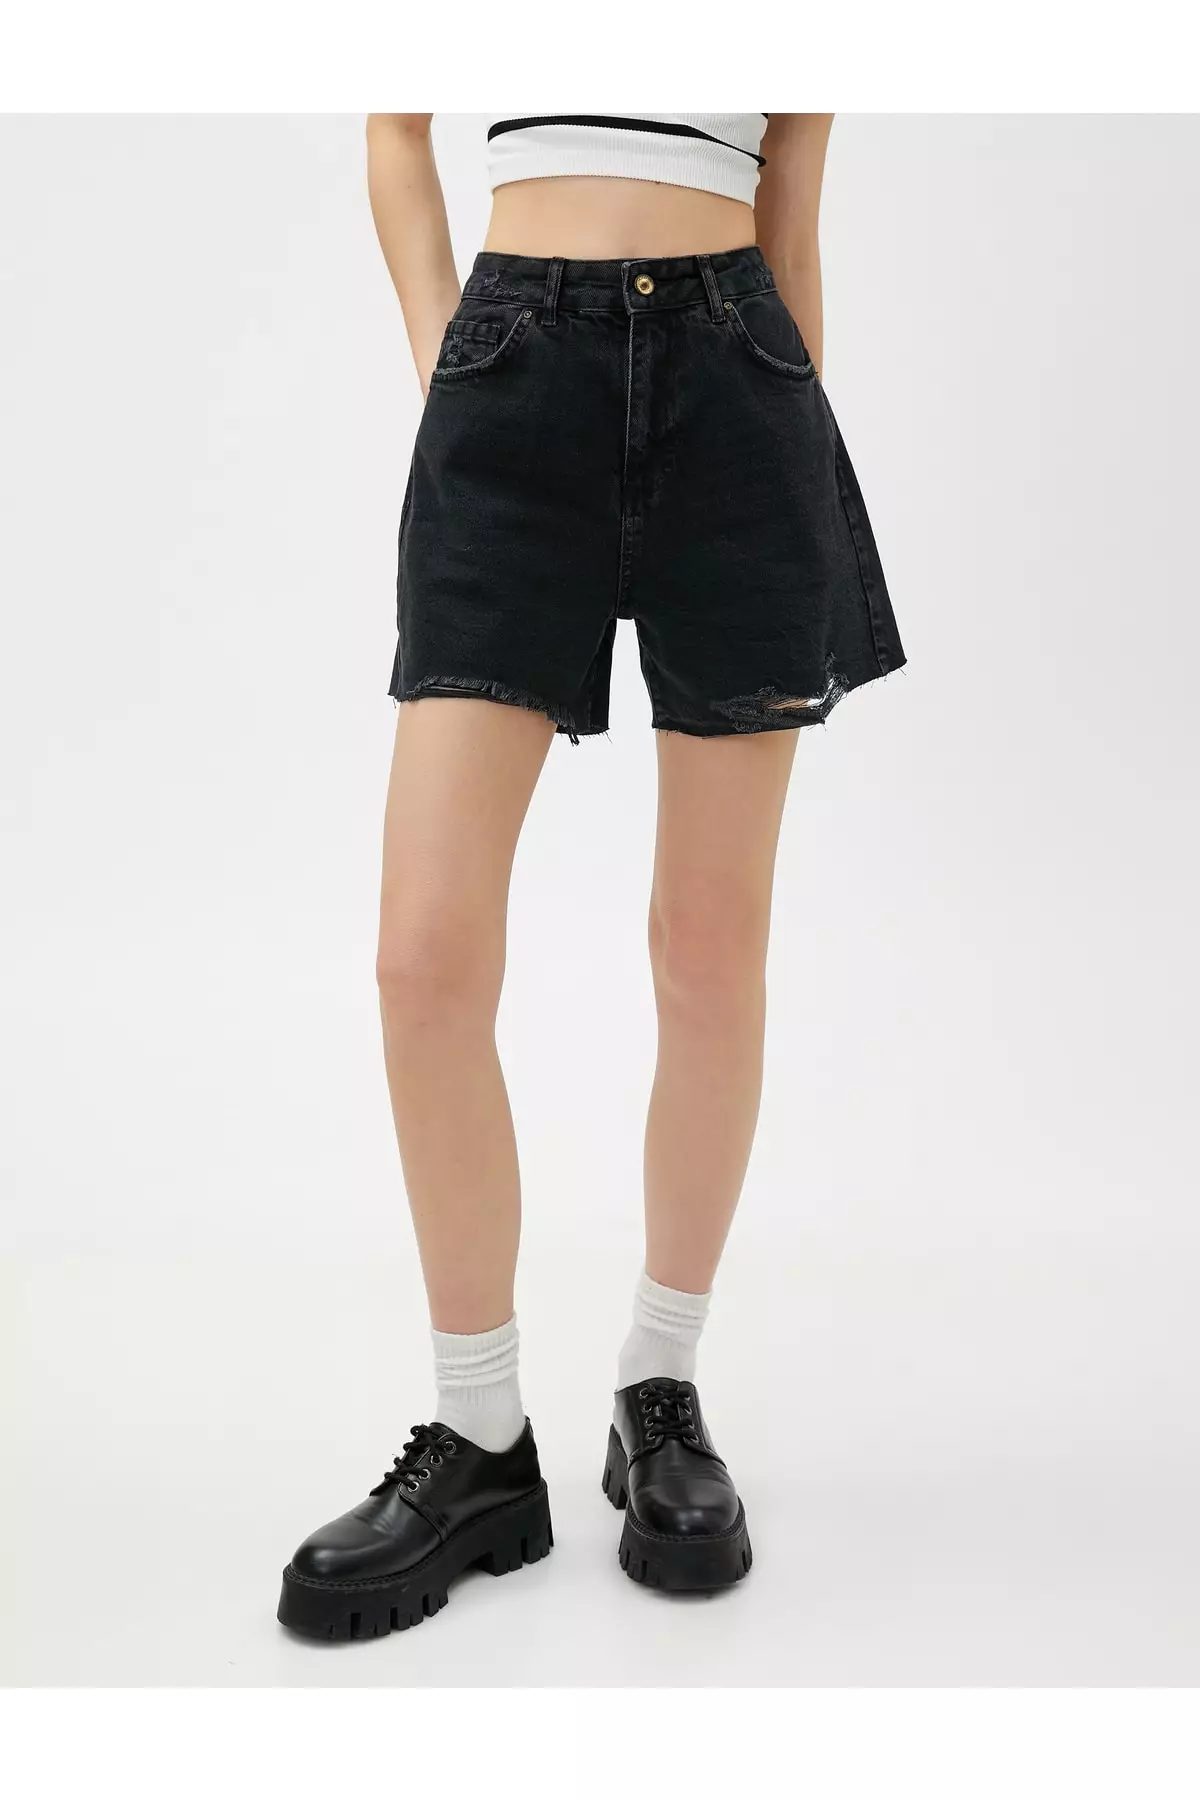 Shorts For Women  Sales & Deals @ ZALORA SG